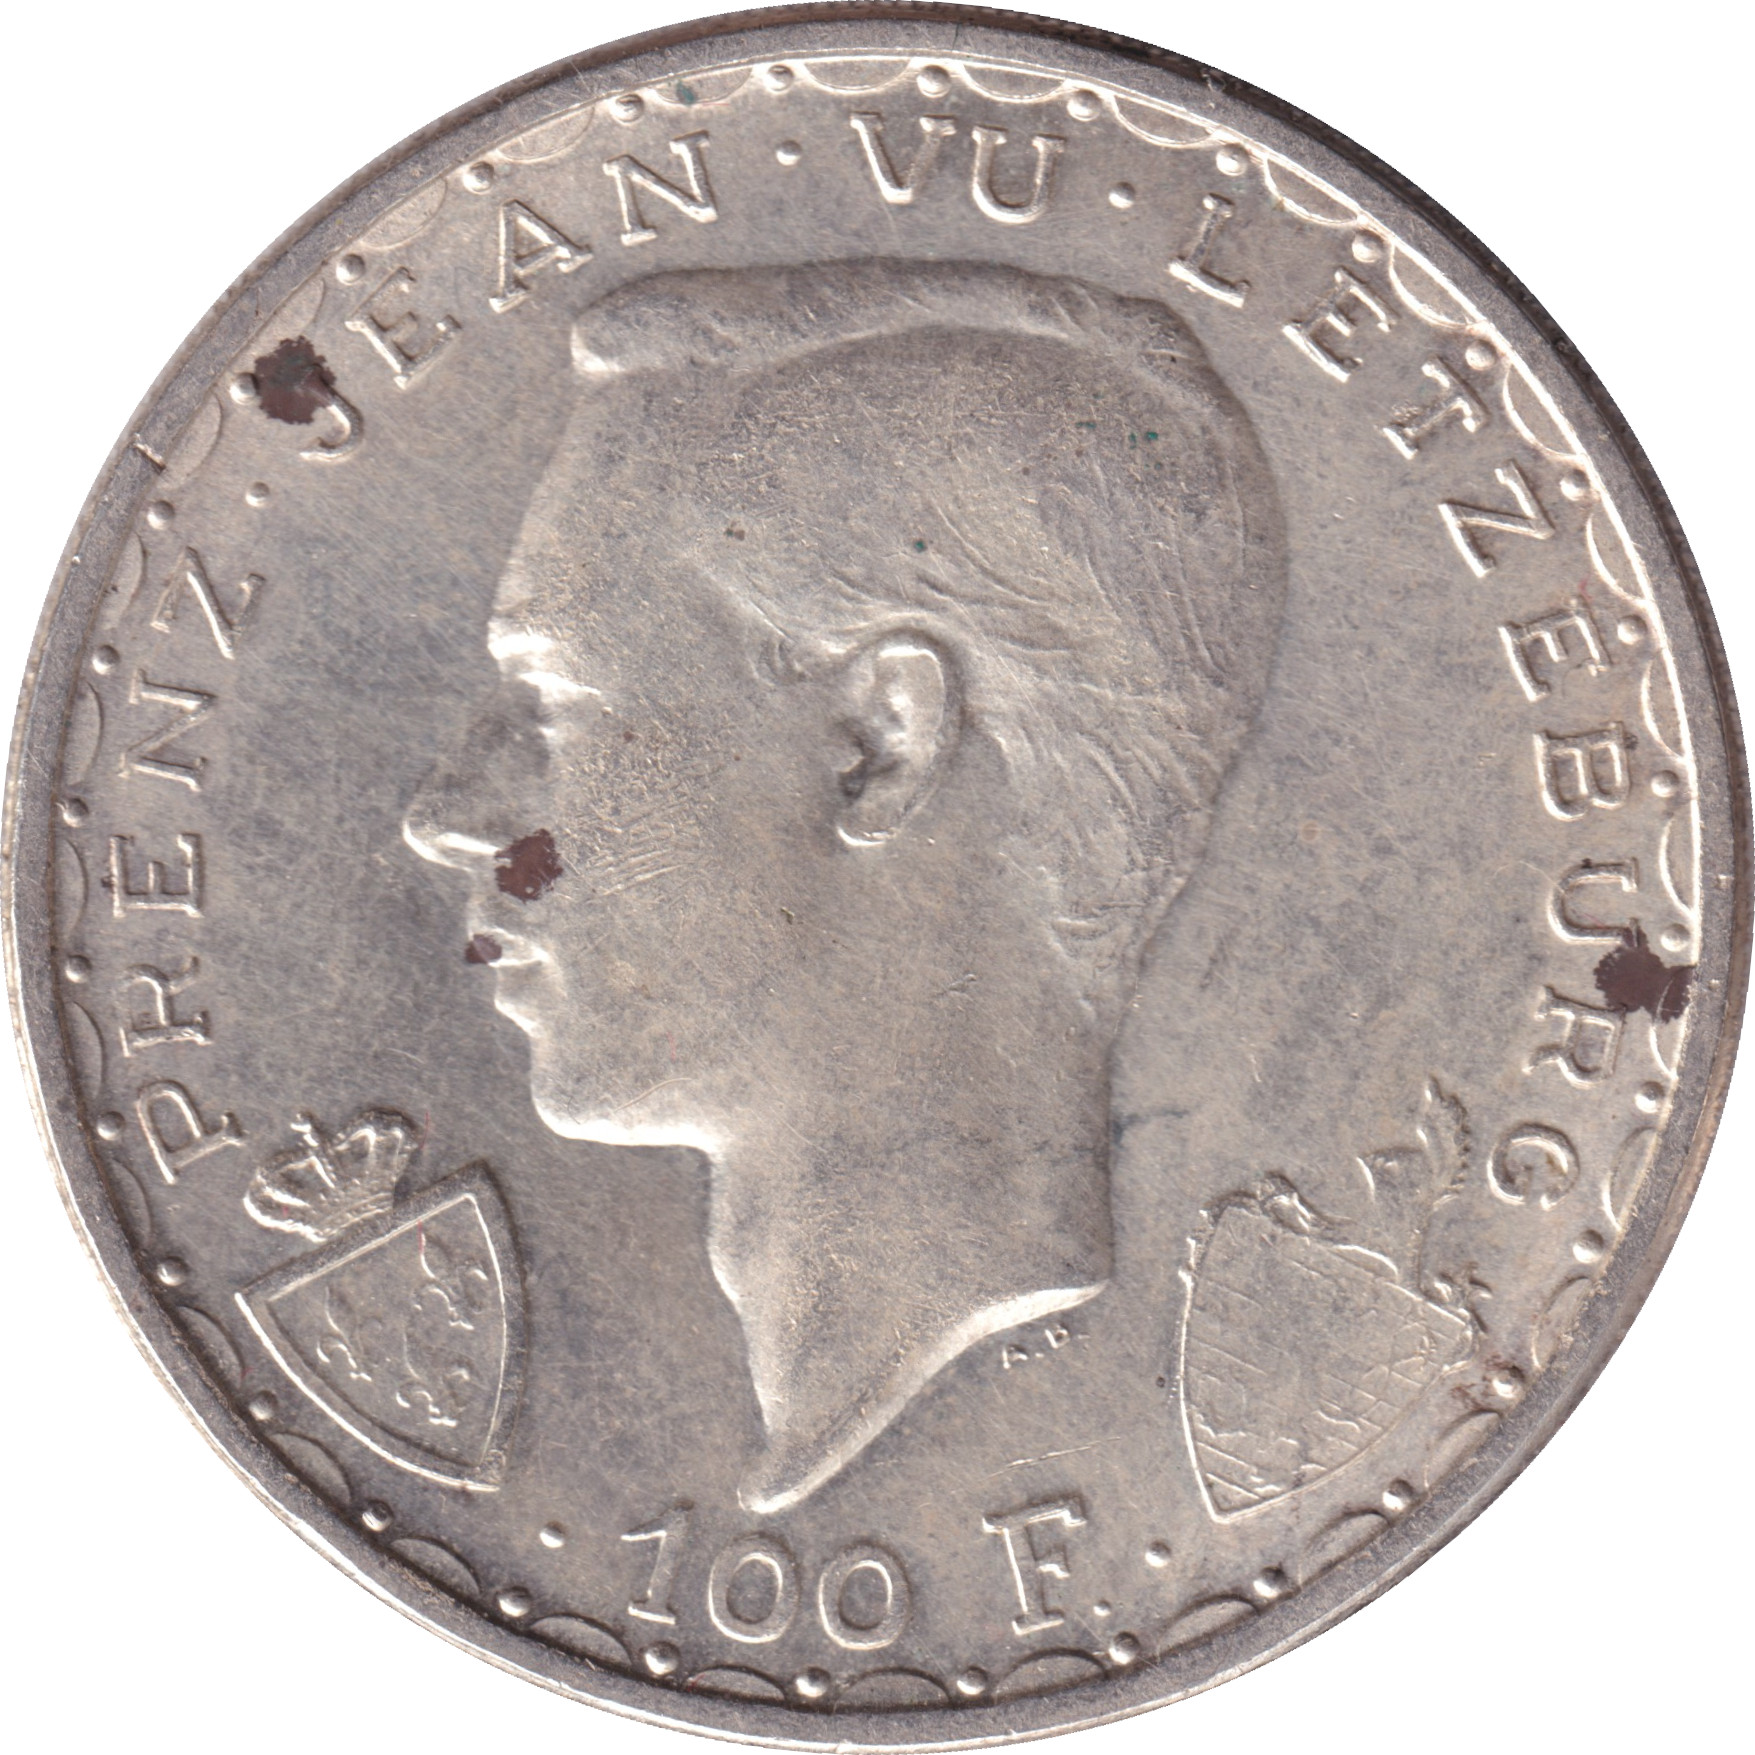 100 francs - Jean l'aveugle - 600 years